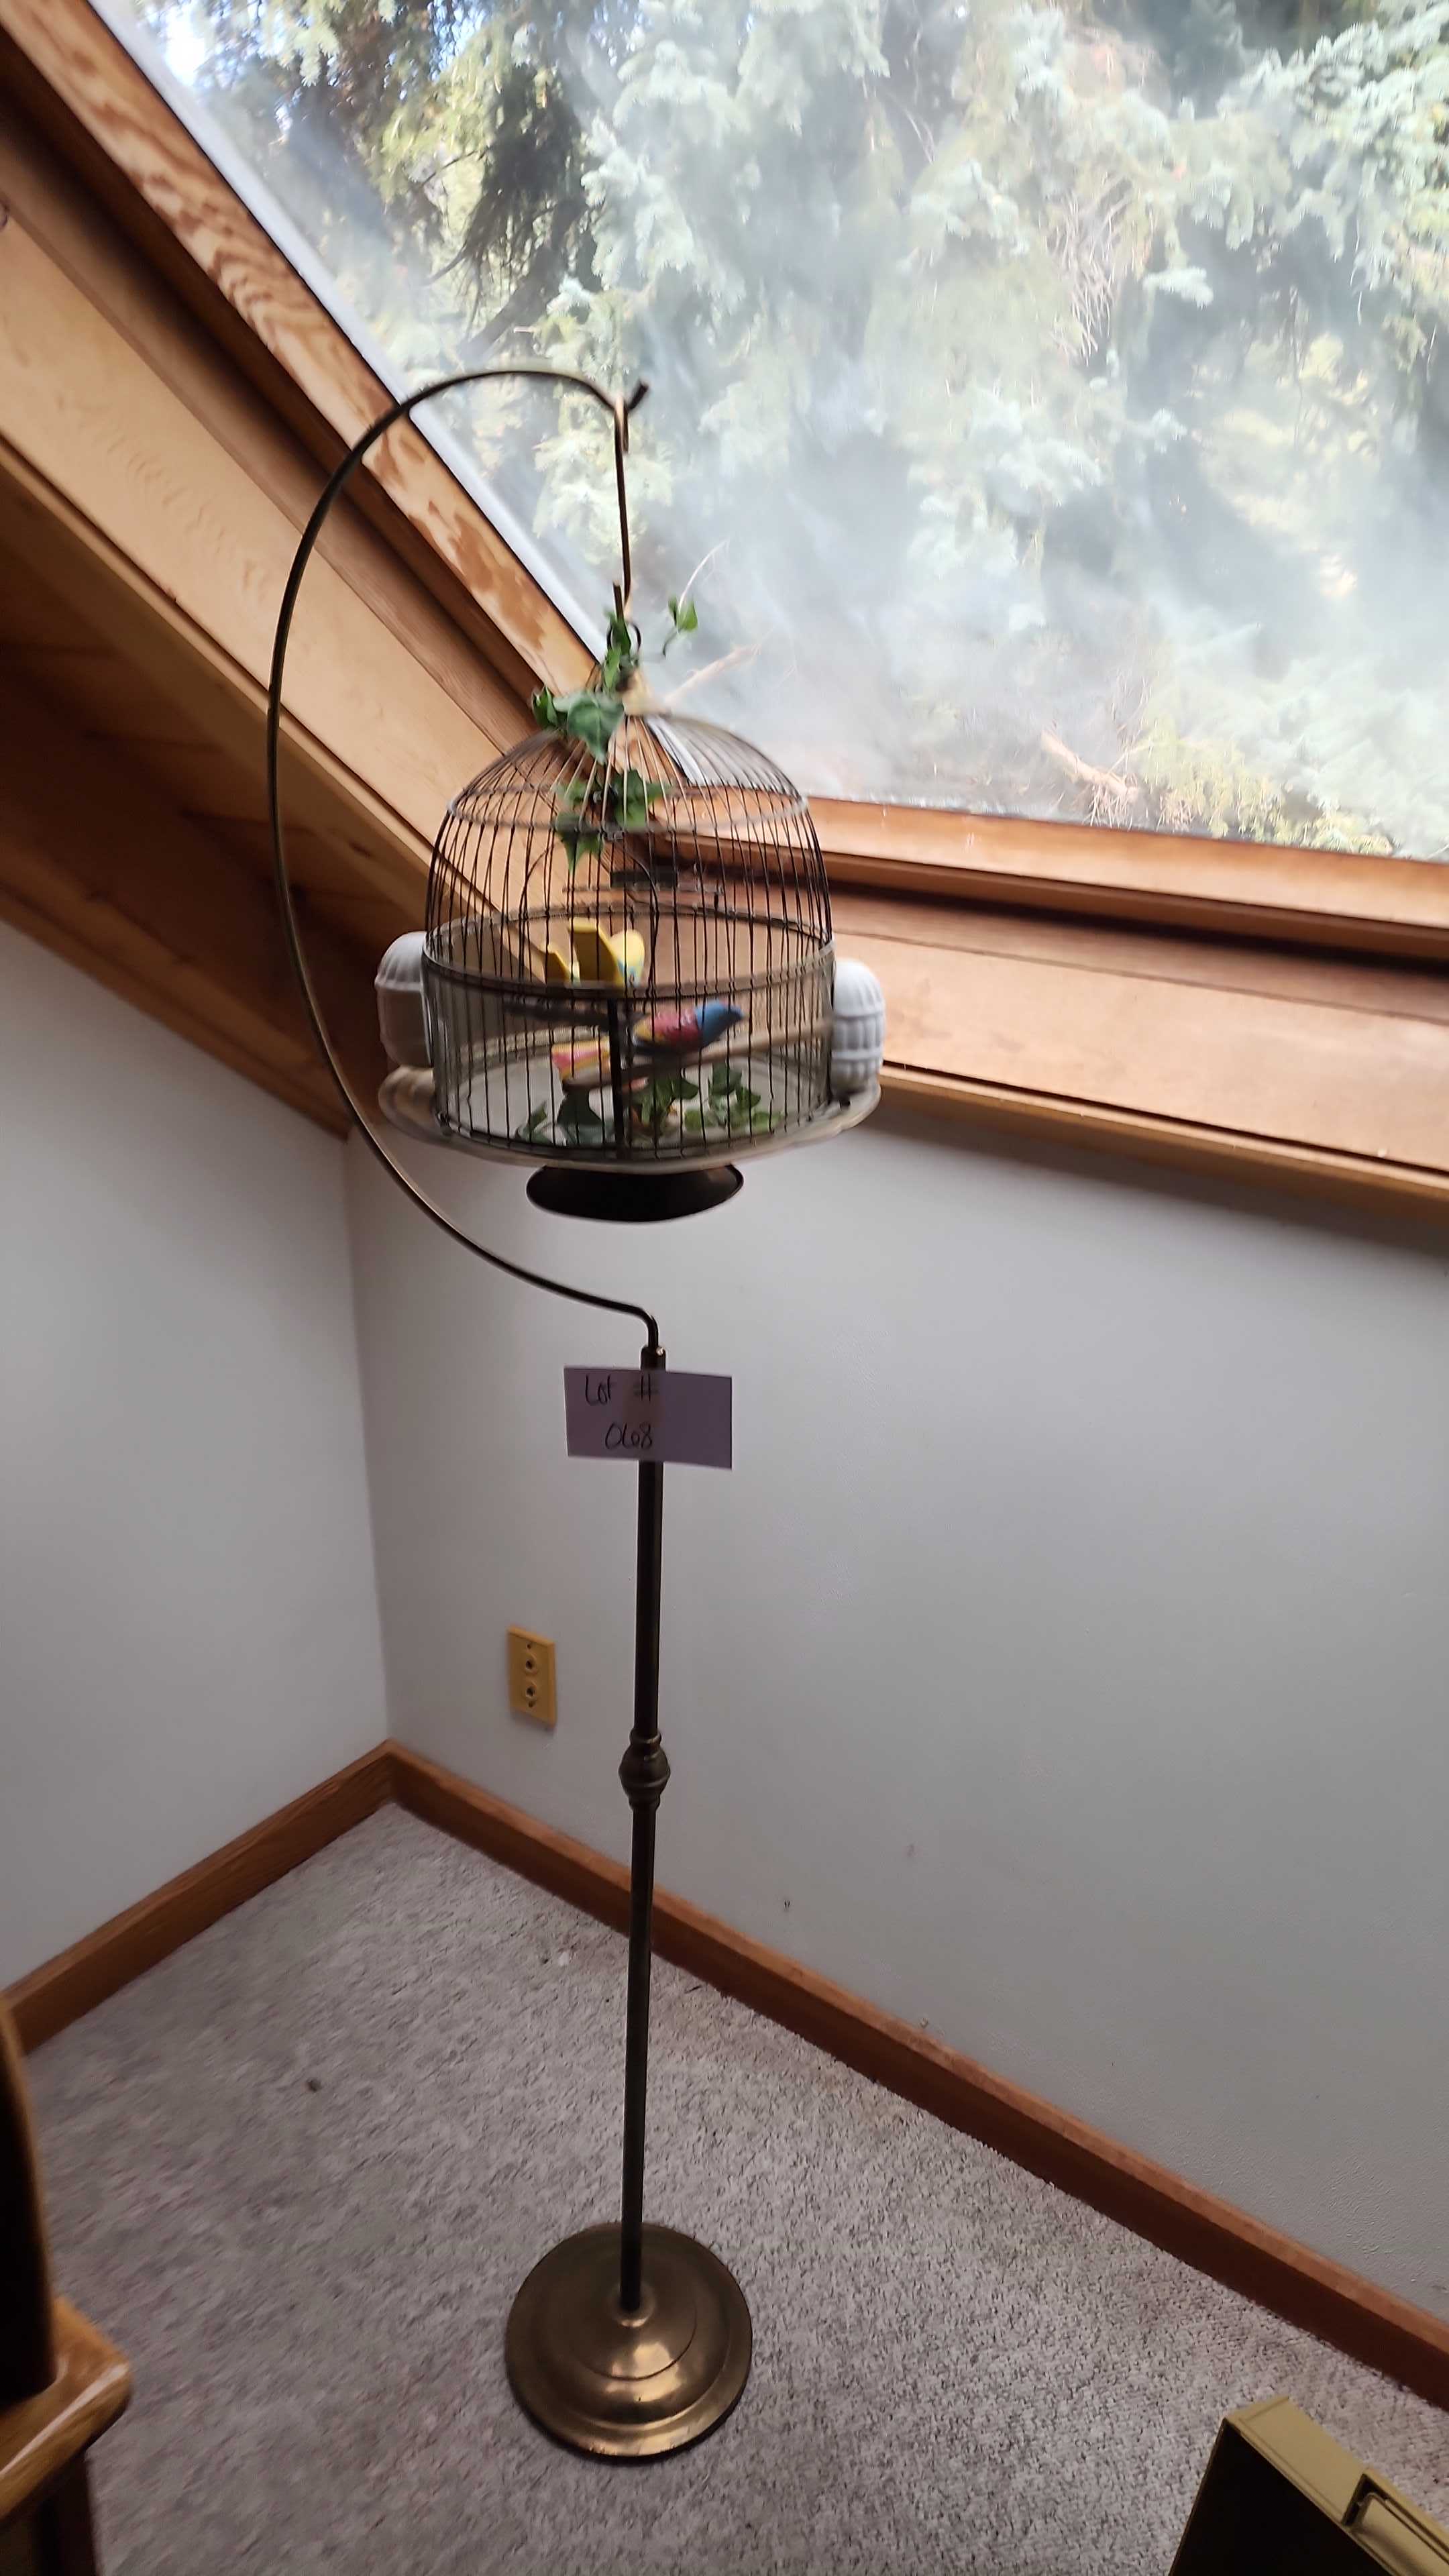 Antique-Brass-Hendryx-Floor-Standing-Birdcage